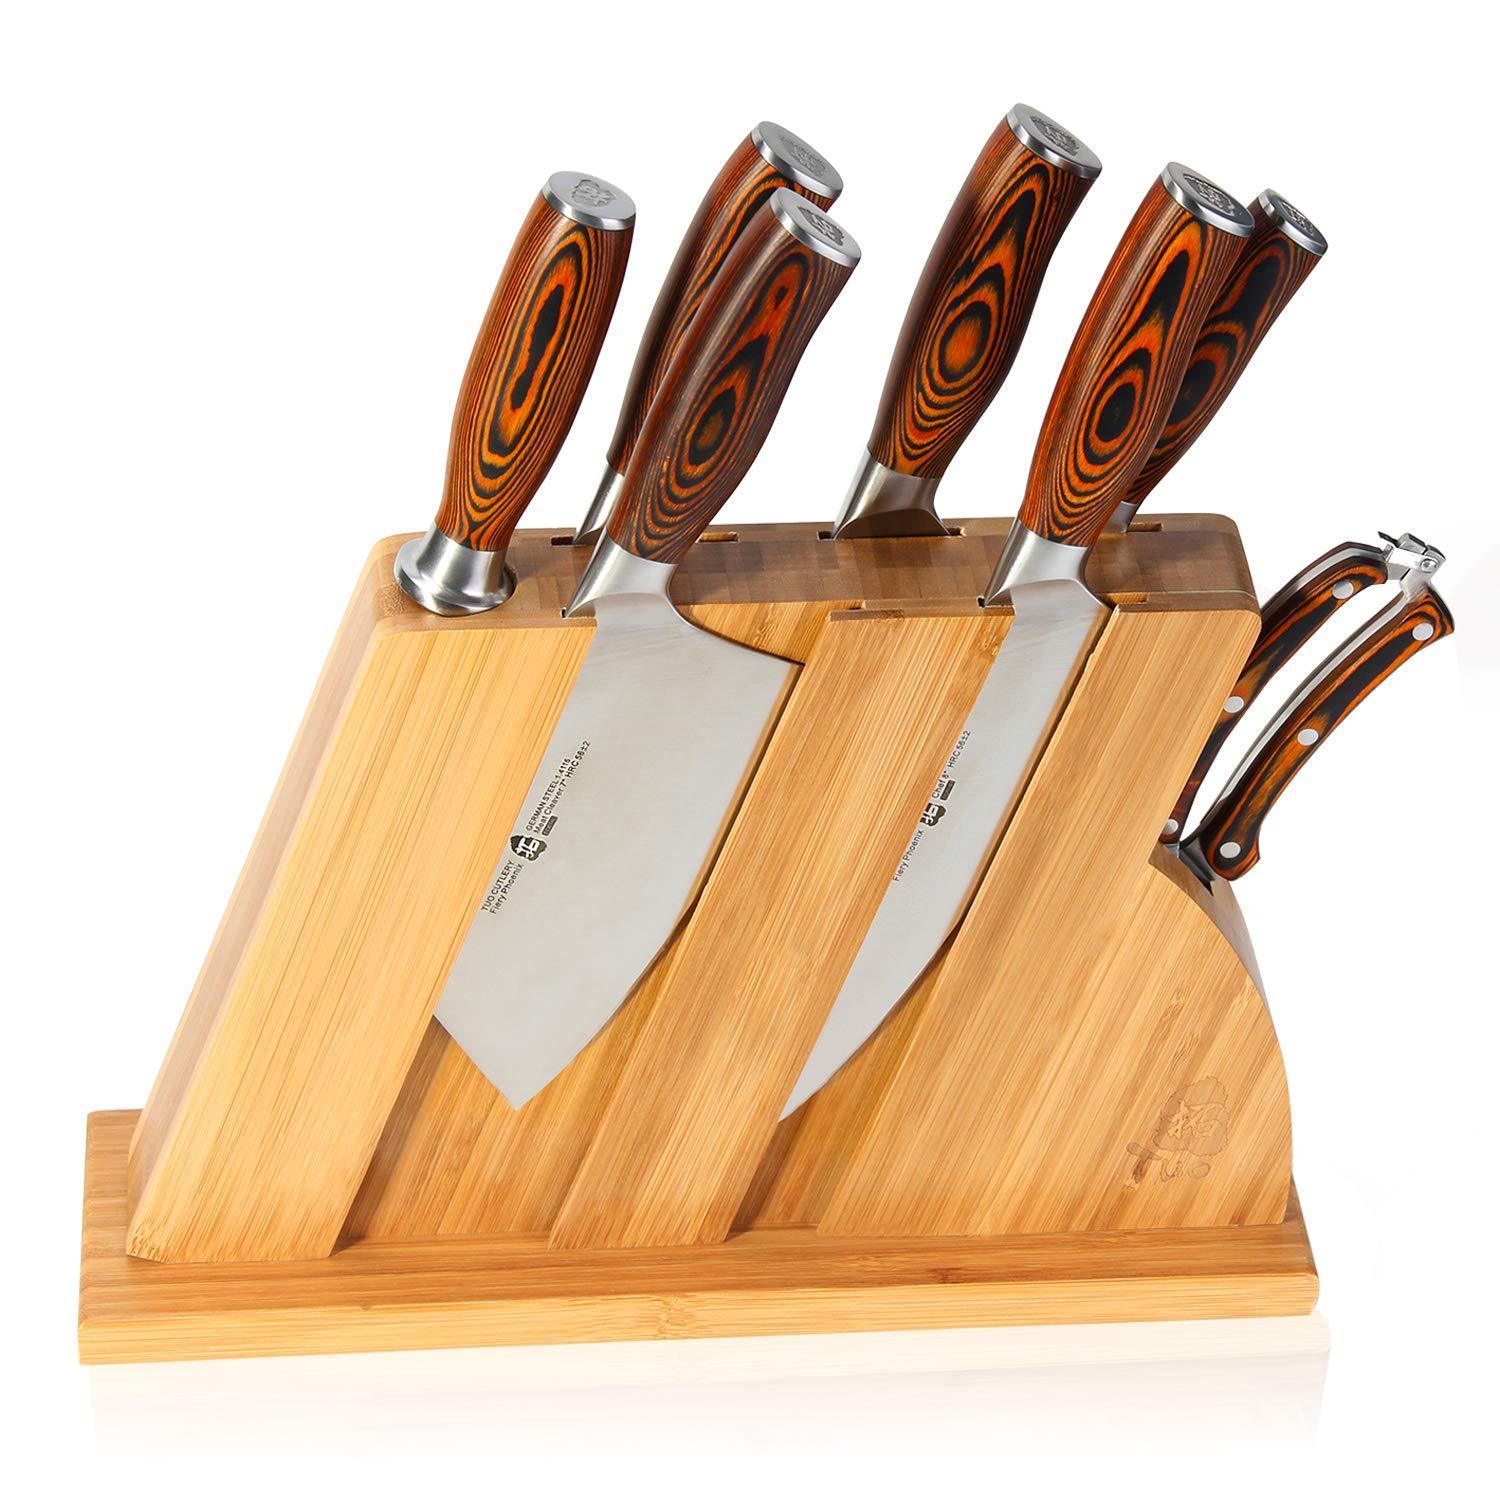 8PCS Kitchen Knives Set ,Stainless Steel Chef Knife Set,Japanese